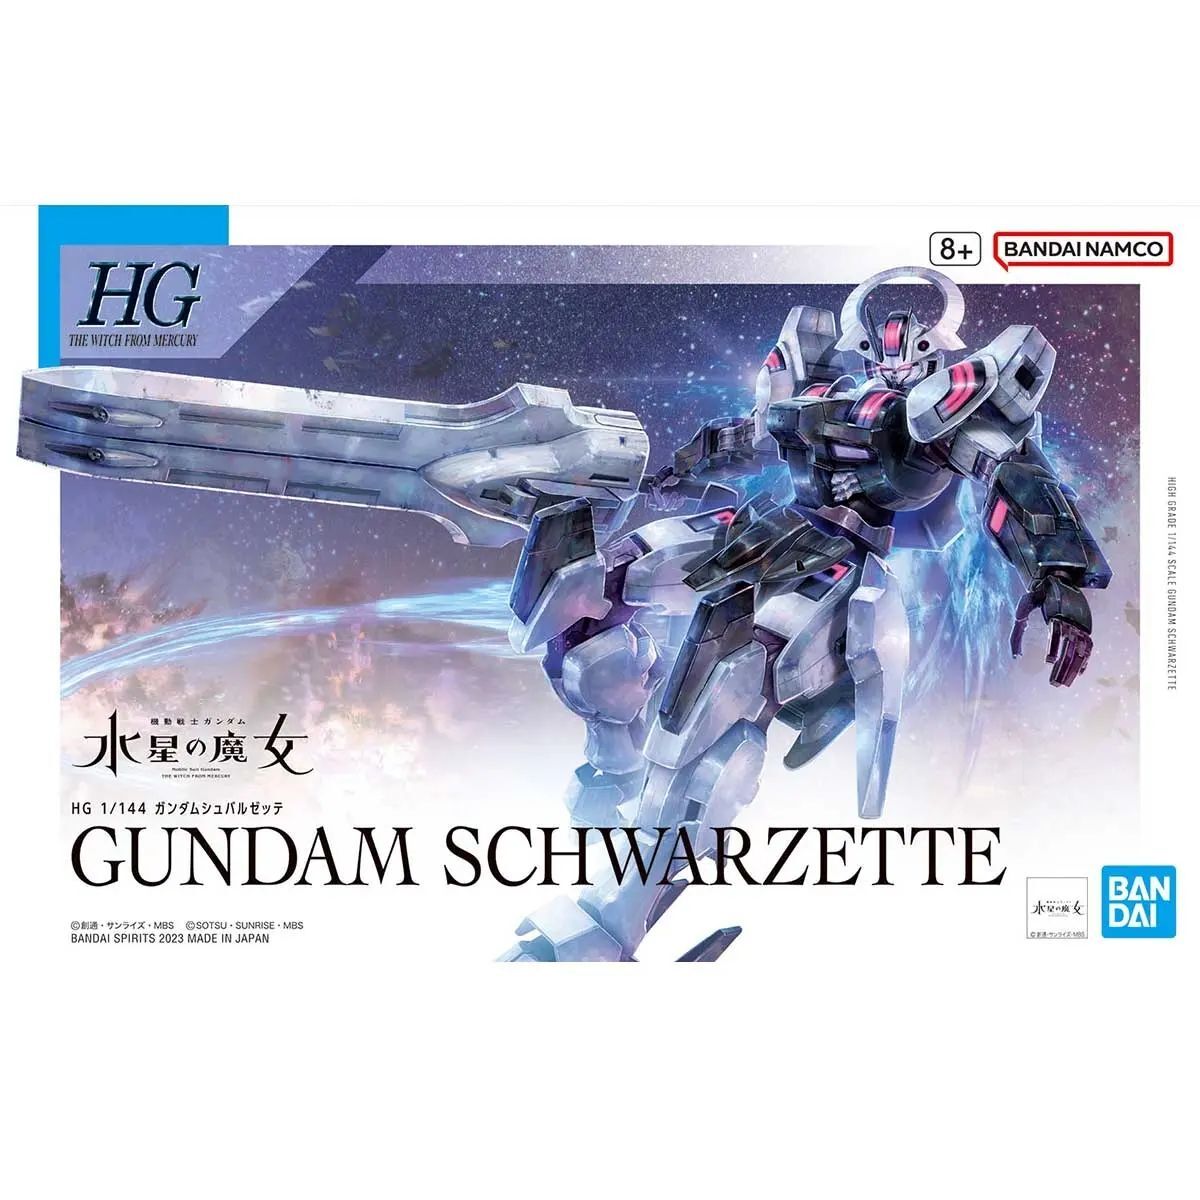 BANDAI 1/144 HG Gundam Schwarzette (The Witch from Mercury)